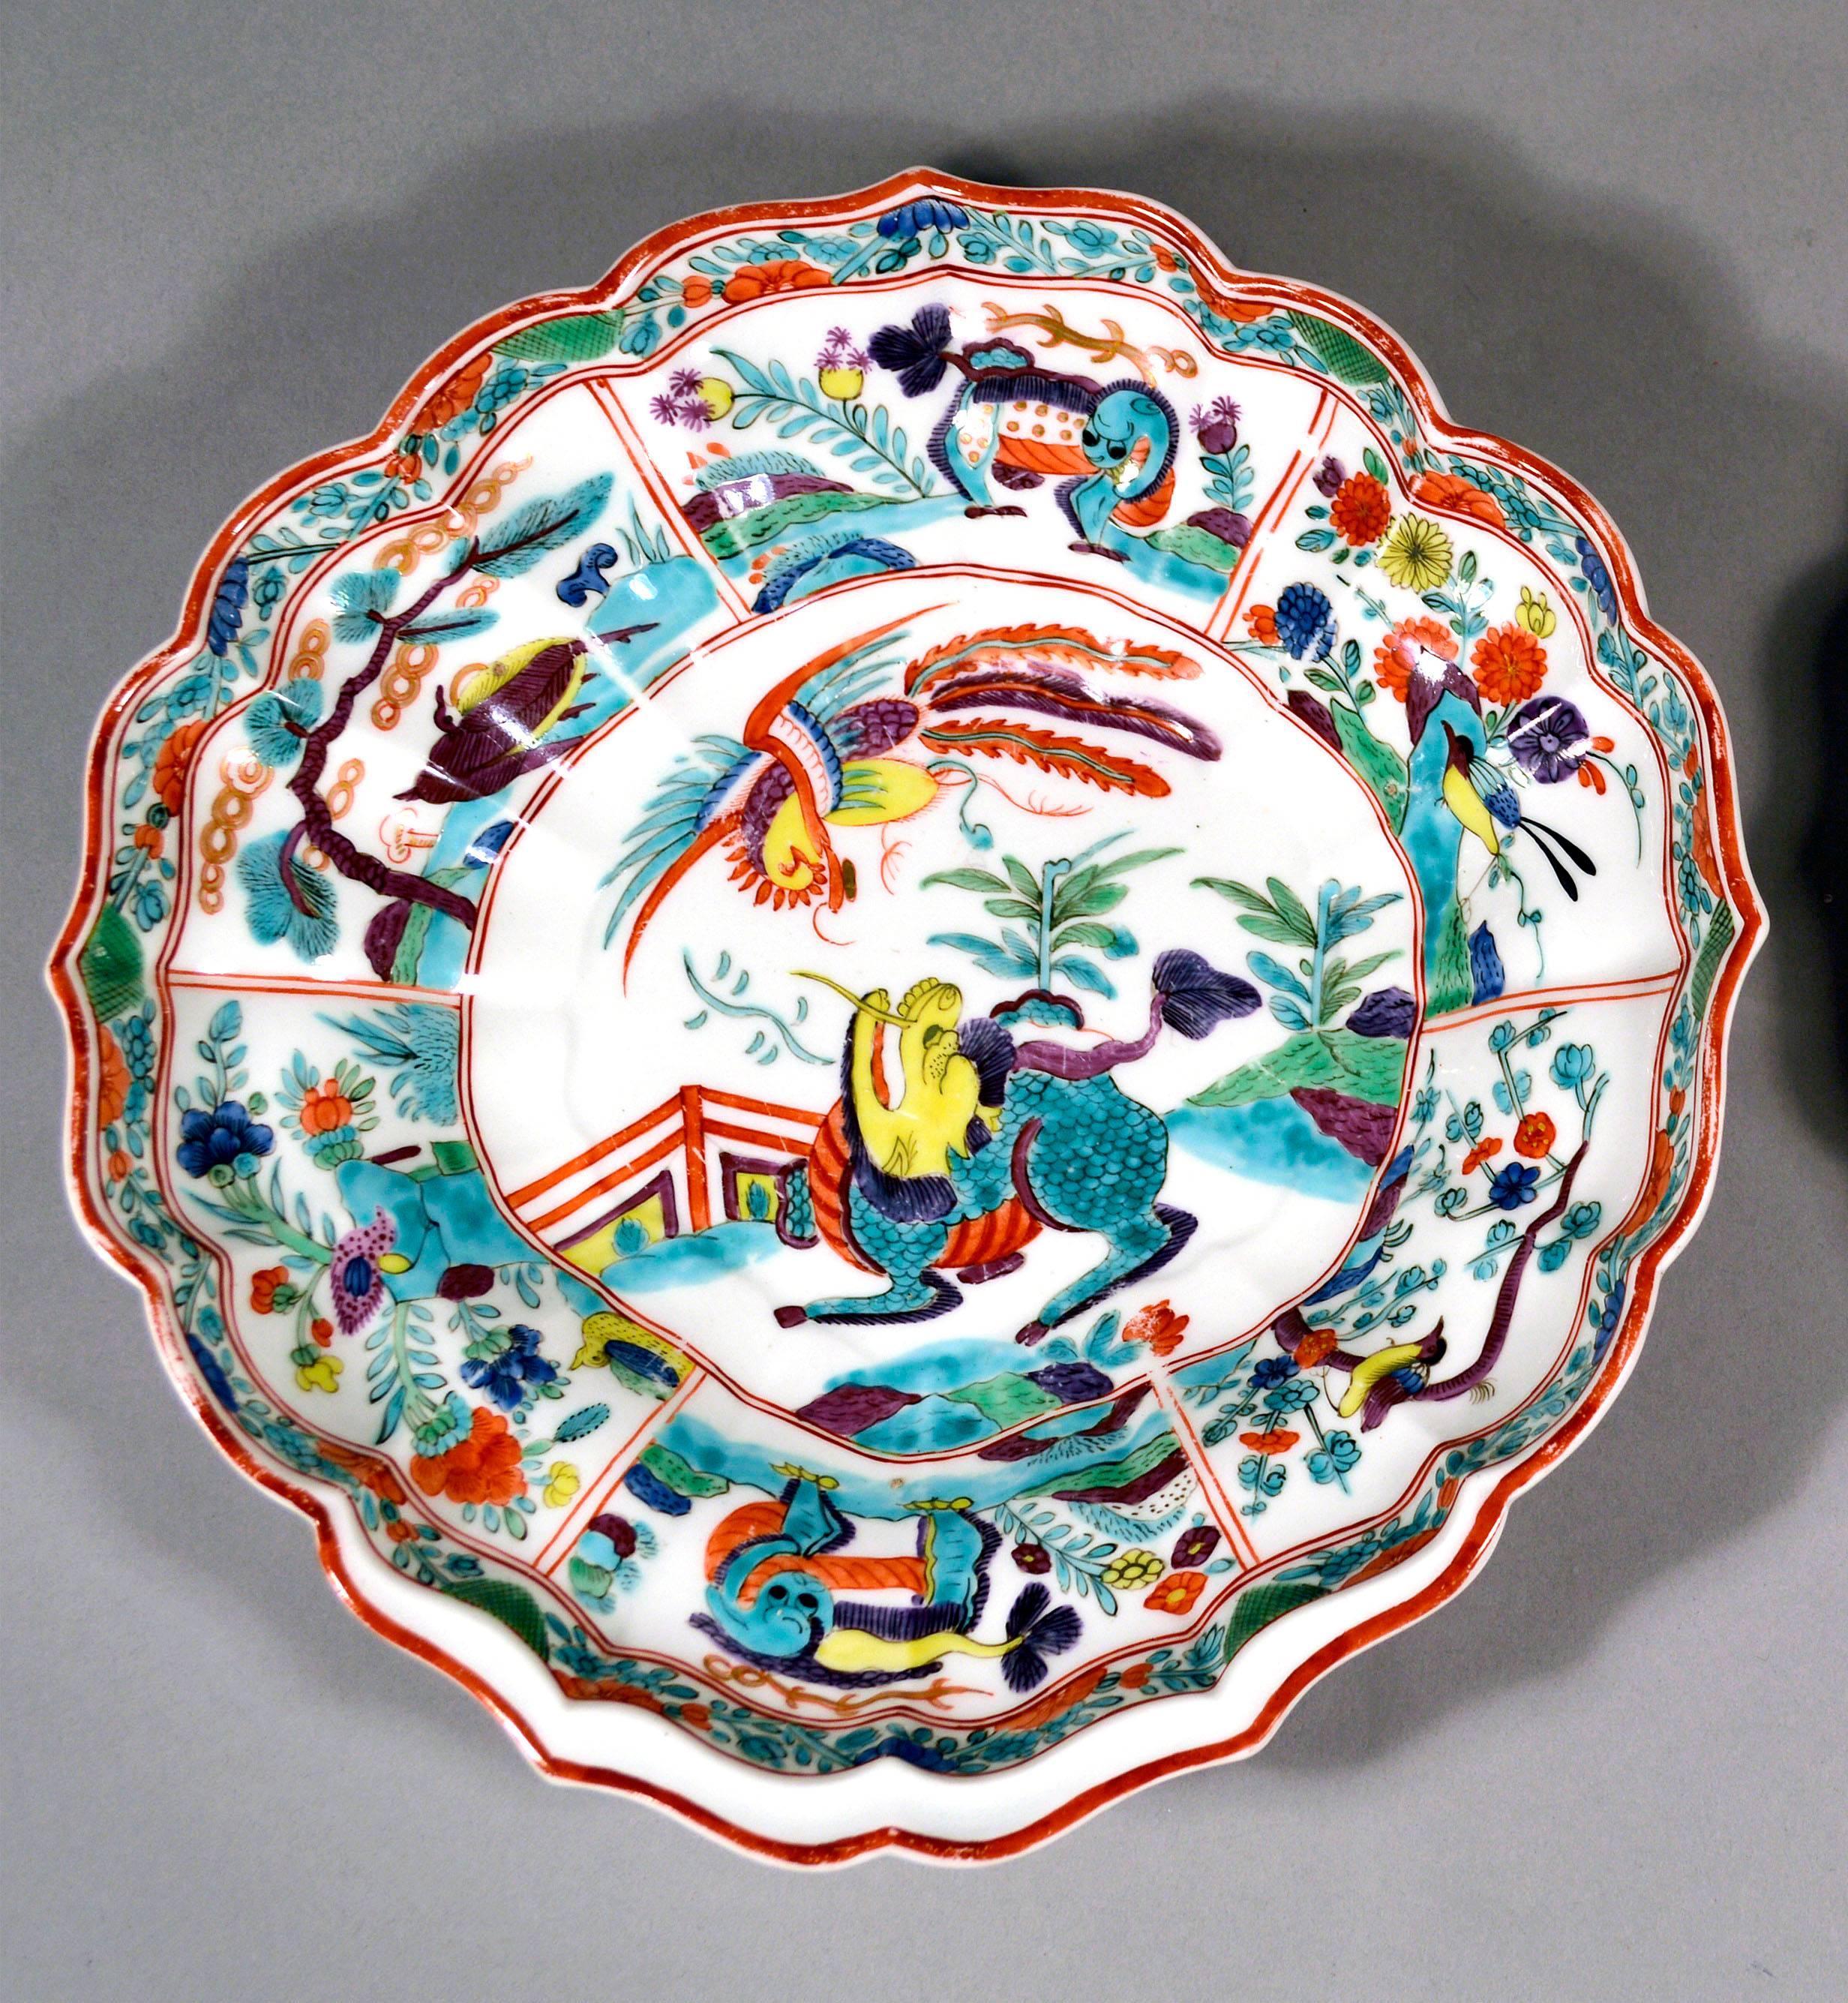 18th Century English Flight Worcester Porcelain Dishes in the Bishop Sumner Pattern